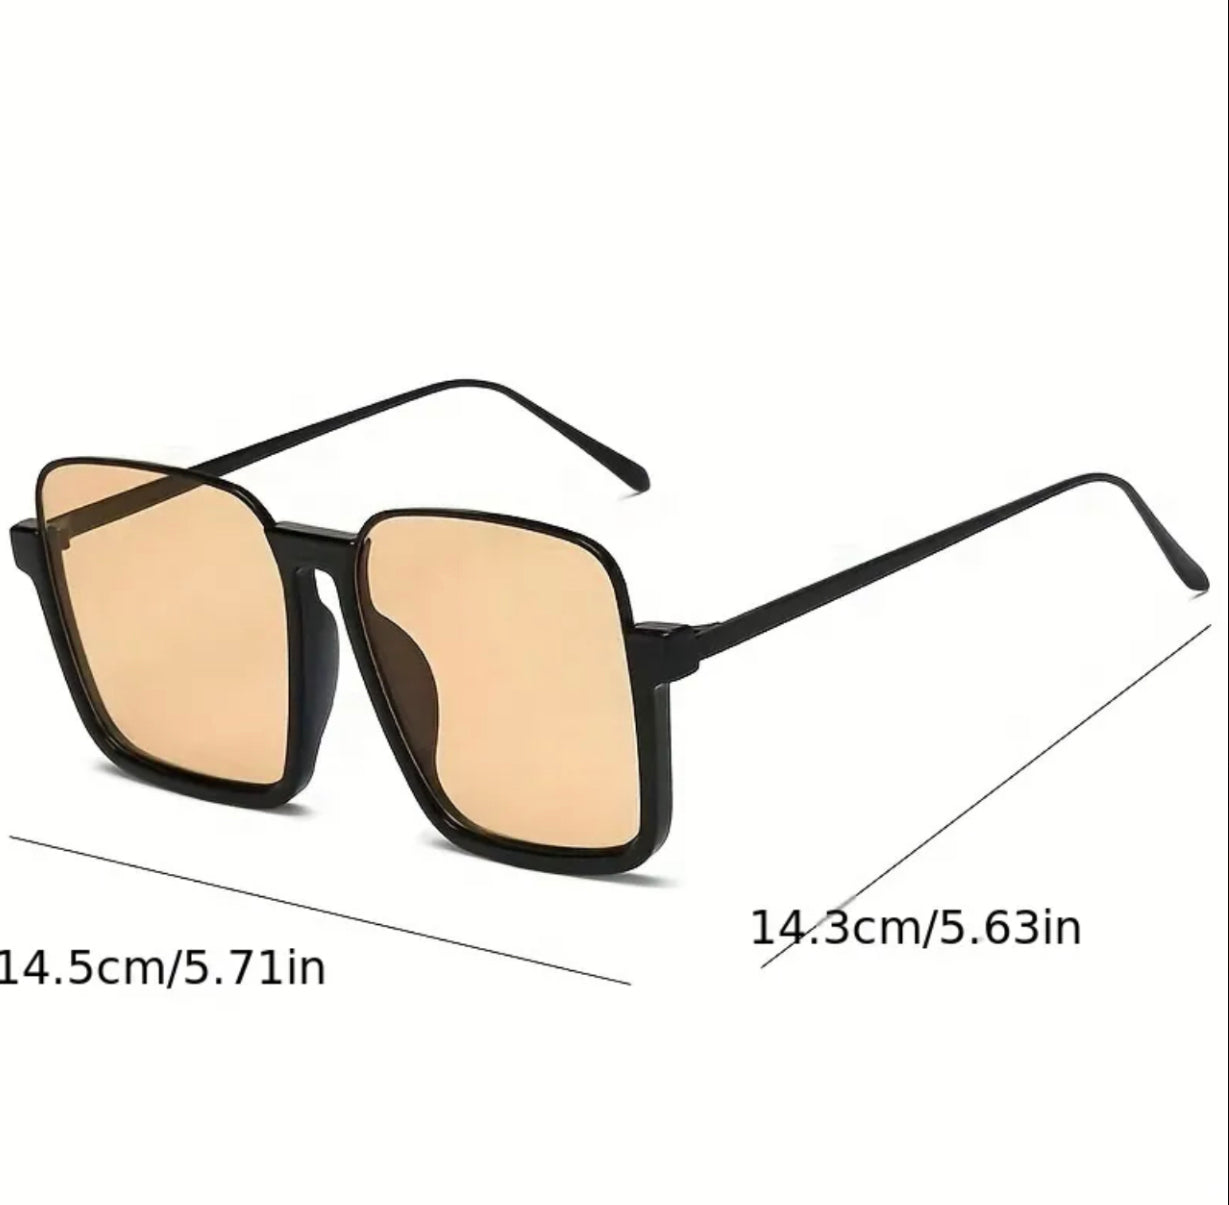 Retro Half-rim Sunglasses, Retro Large Lens Stylish UV Protection Outdoor Sunglasses, Women's Sunglasses